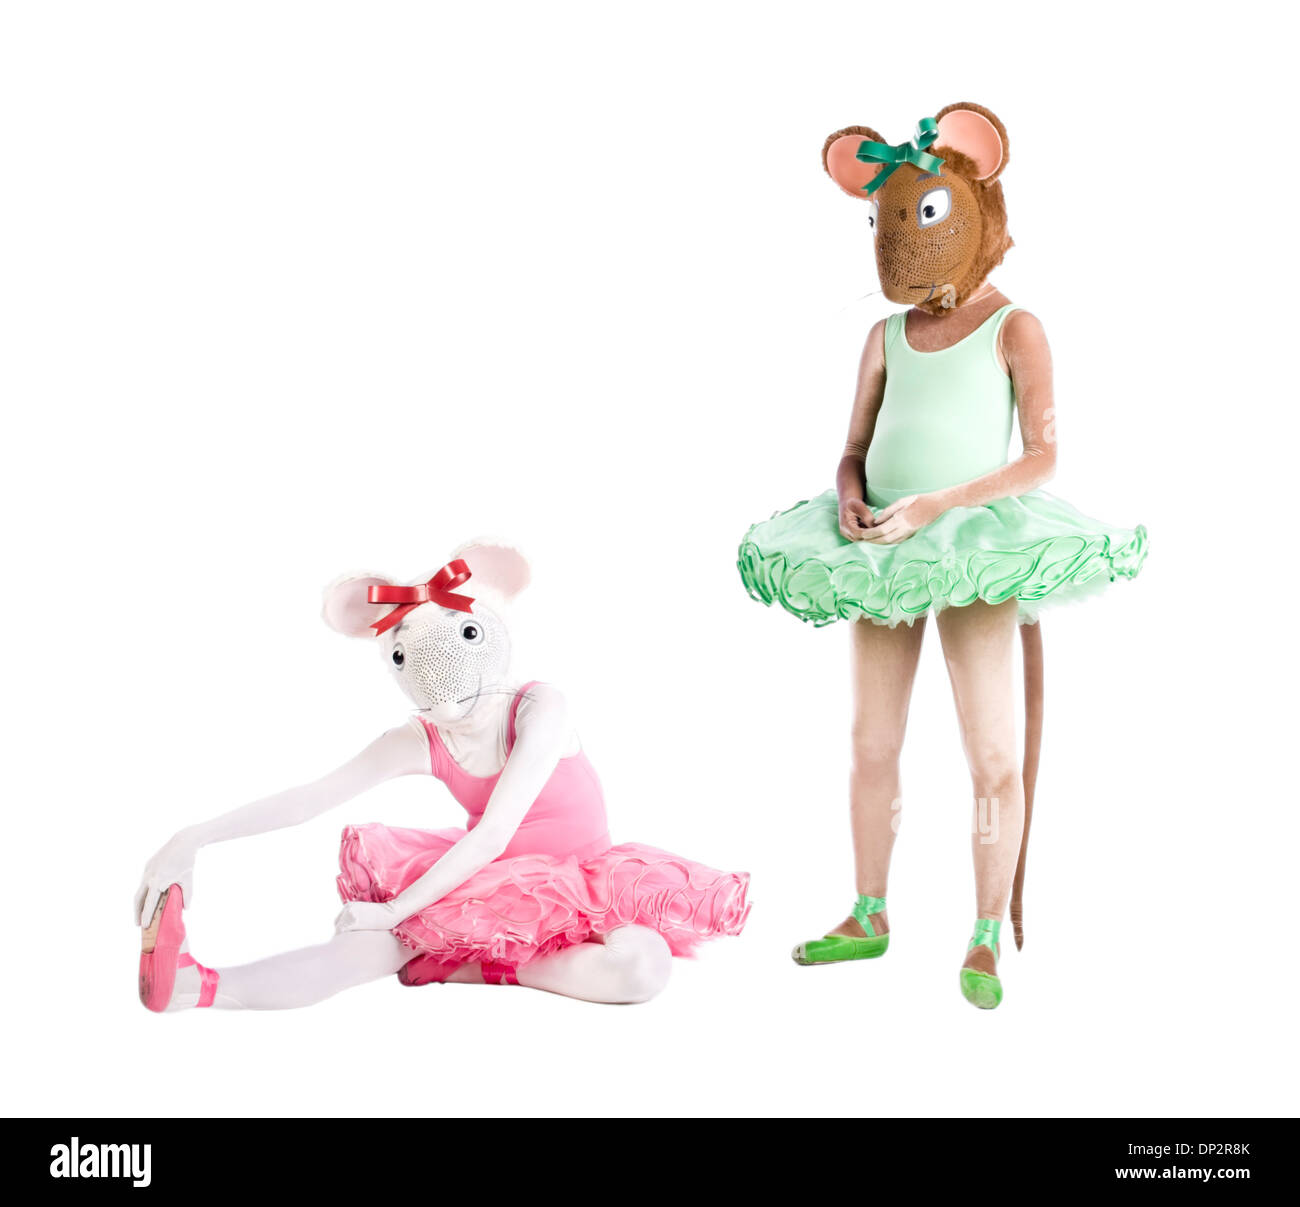 grave Moralsk uddannelse får Angelina Ballerina and friend photographed in the studio Stock Photo - Alamy